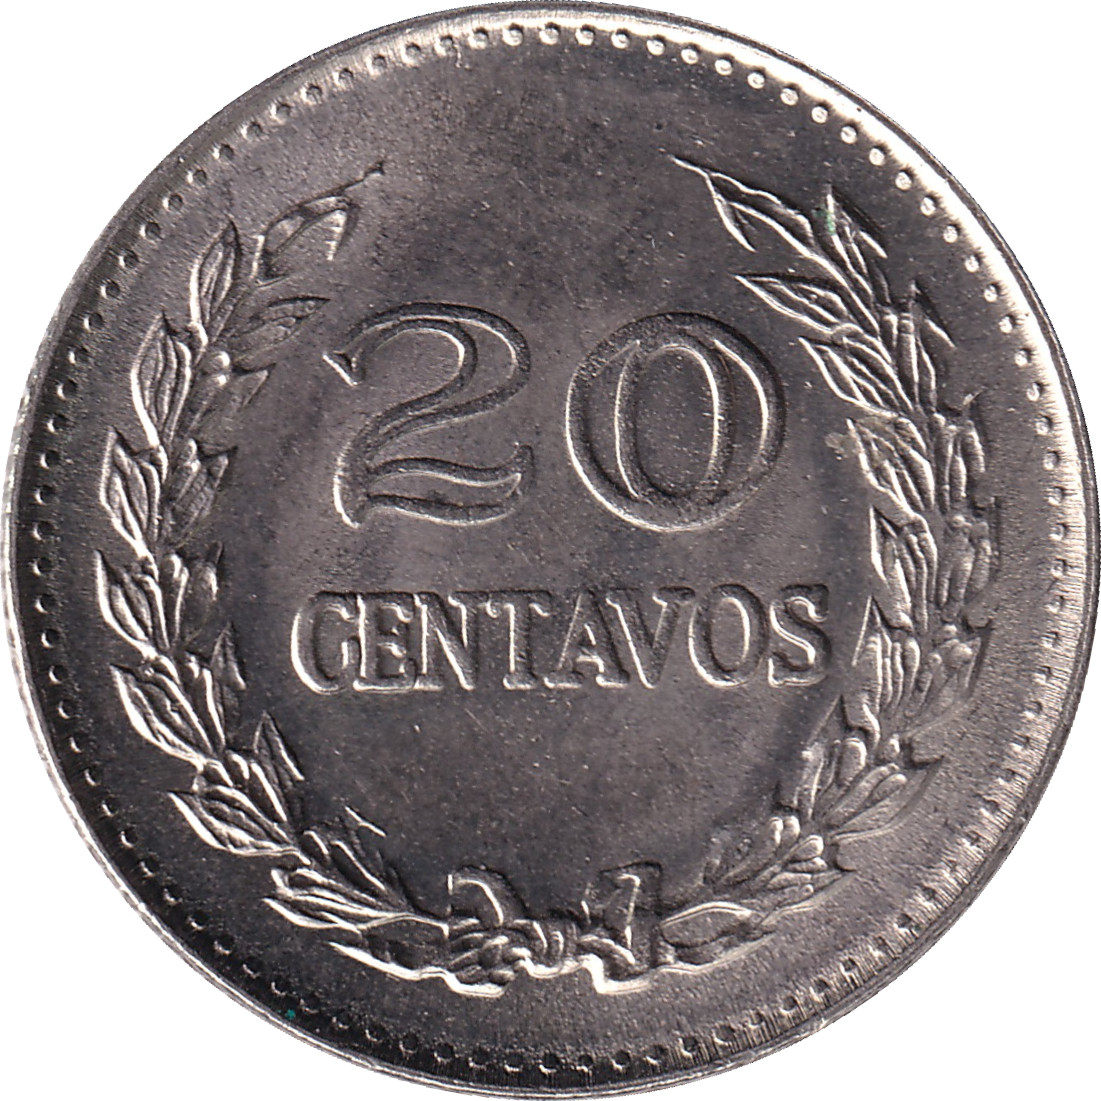 20 centavos - Santander - Petite tête